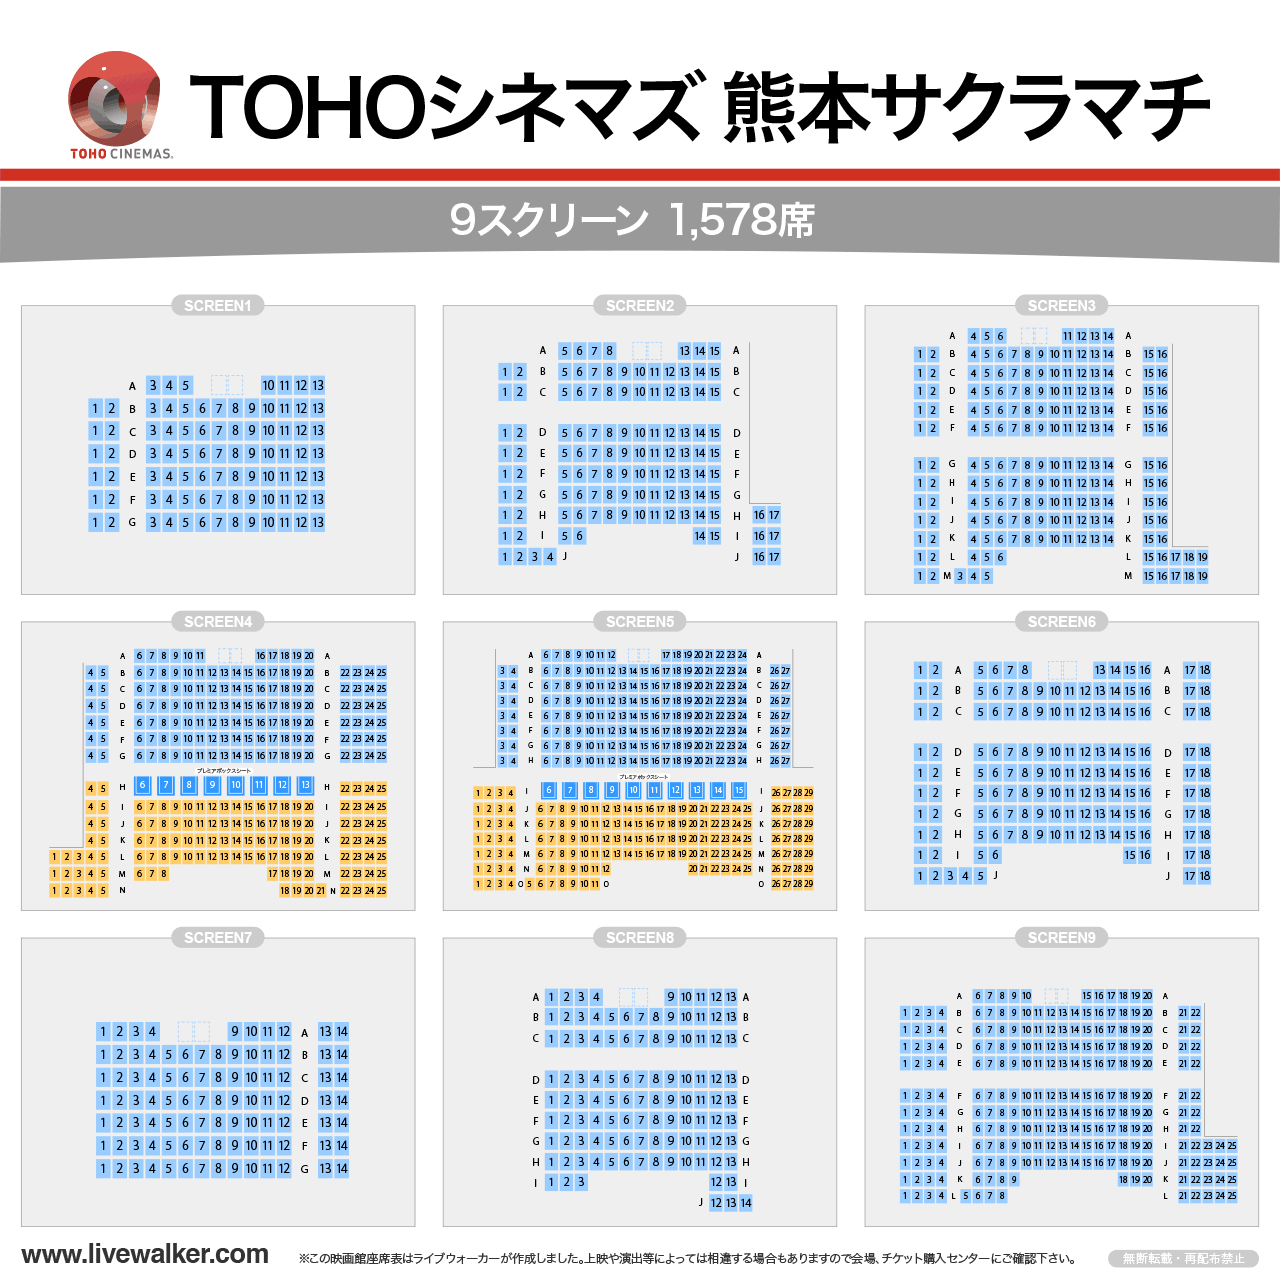 TOHOシネマズ 熊本サクラマチスクリーンの座席表